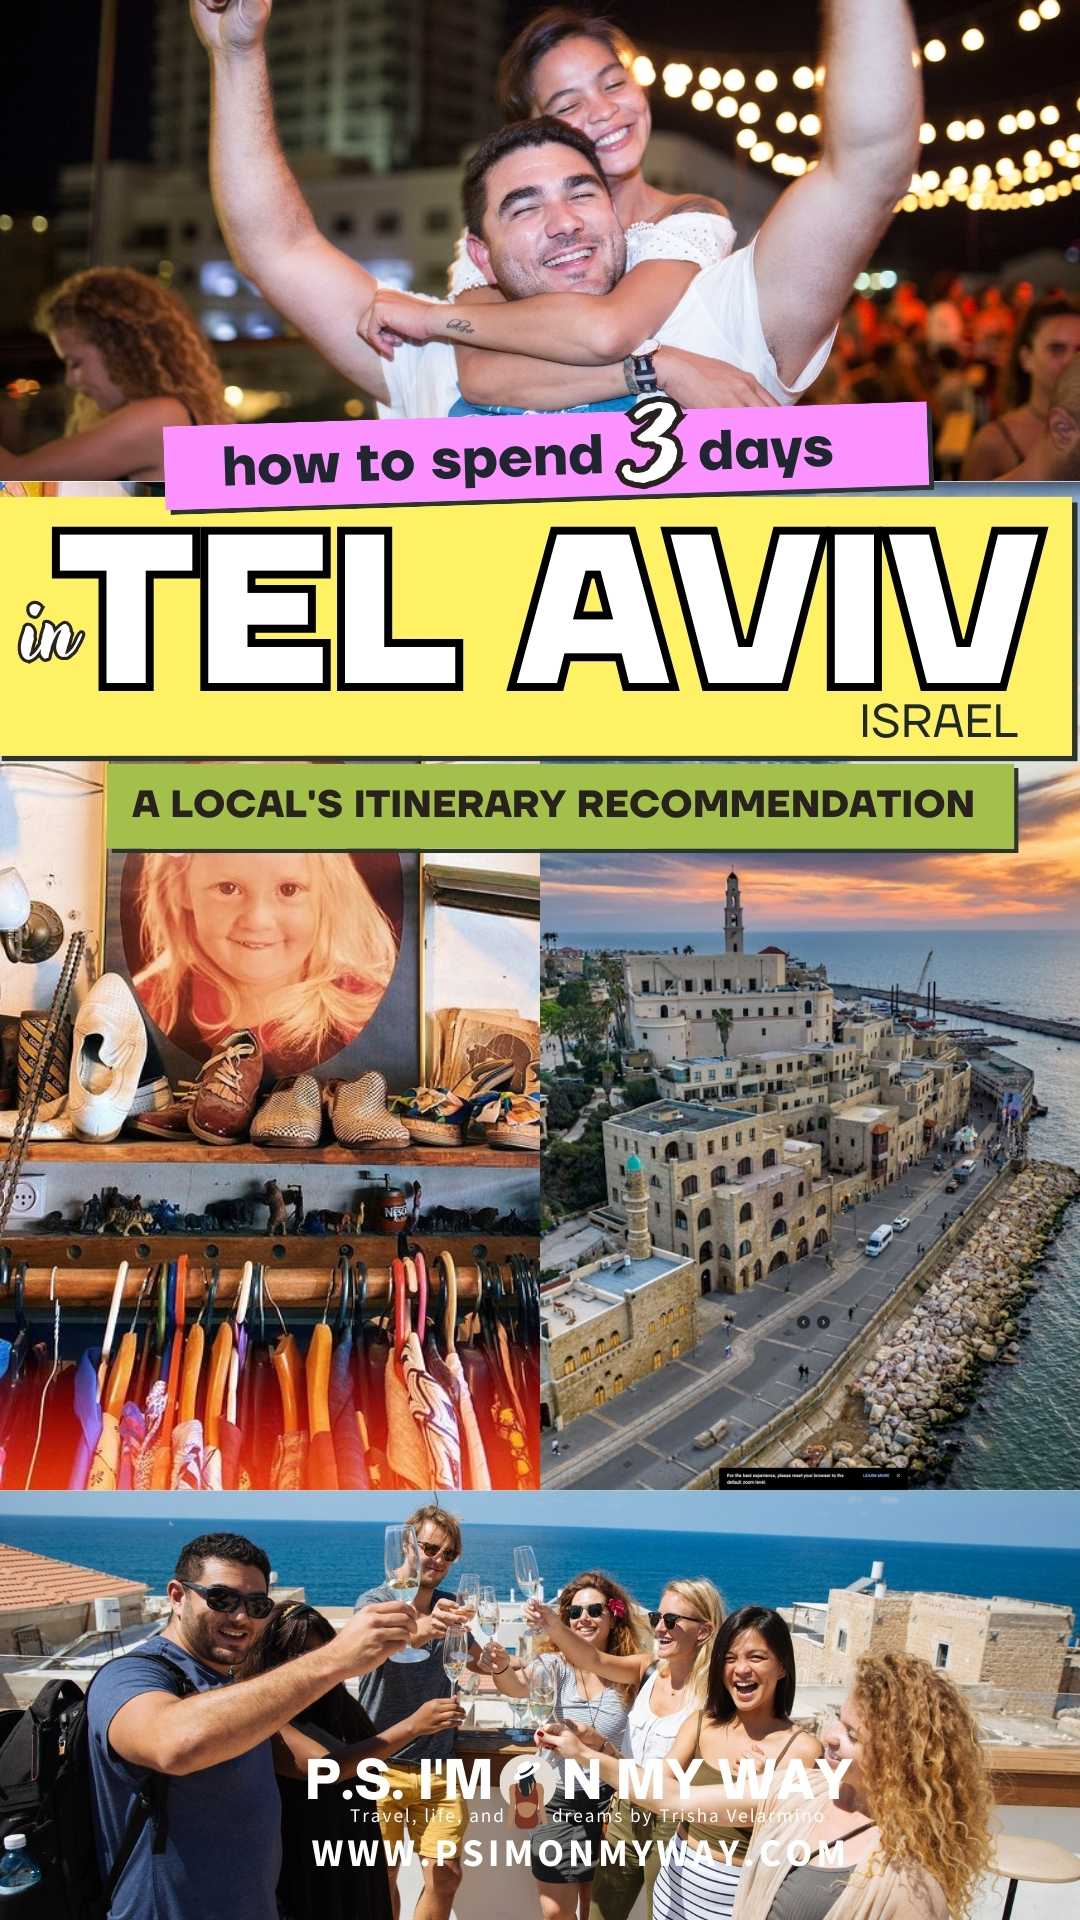 tel aviv itinerary